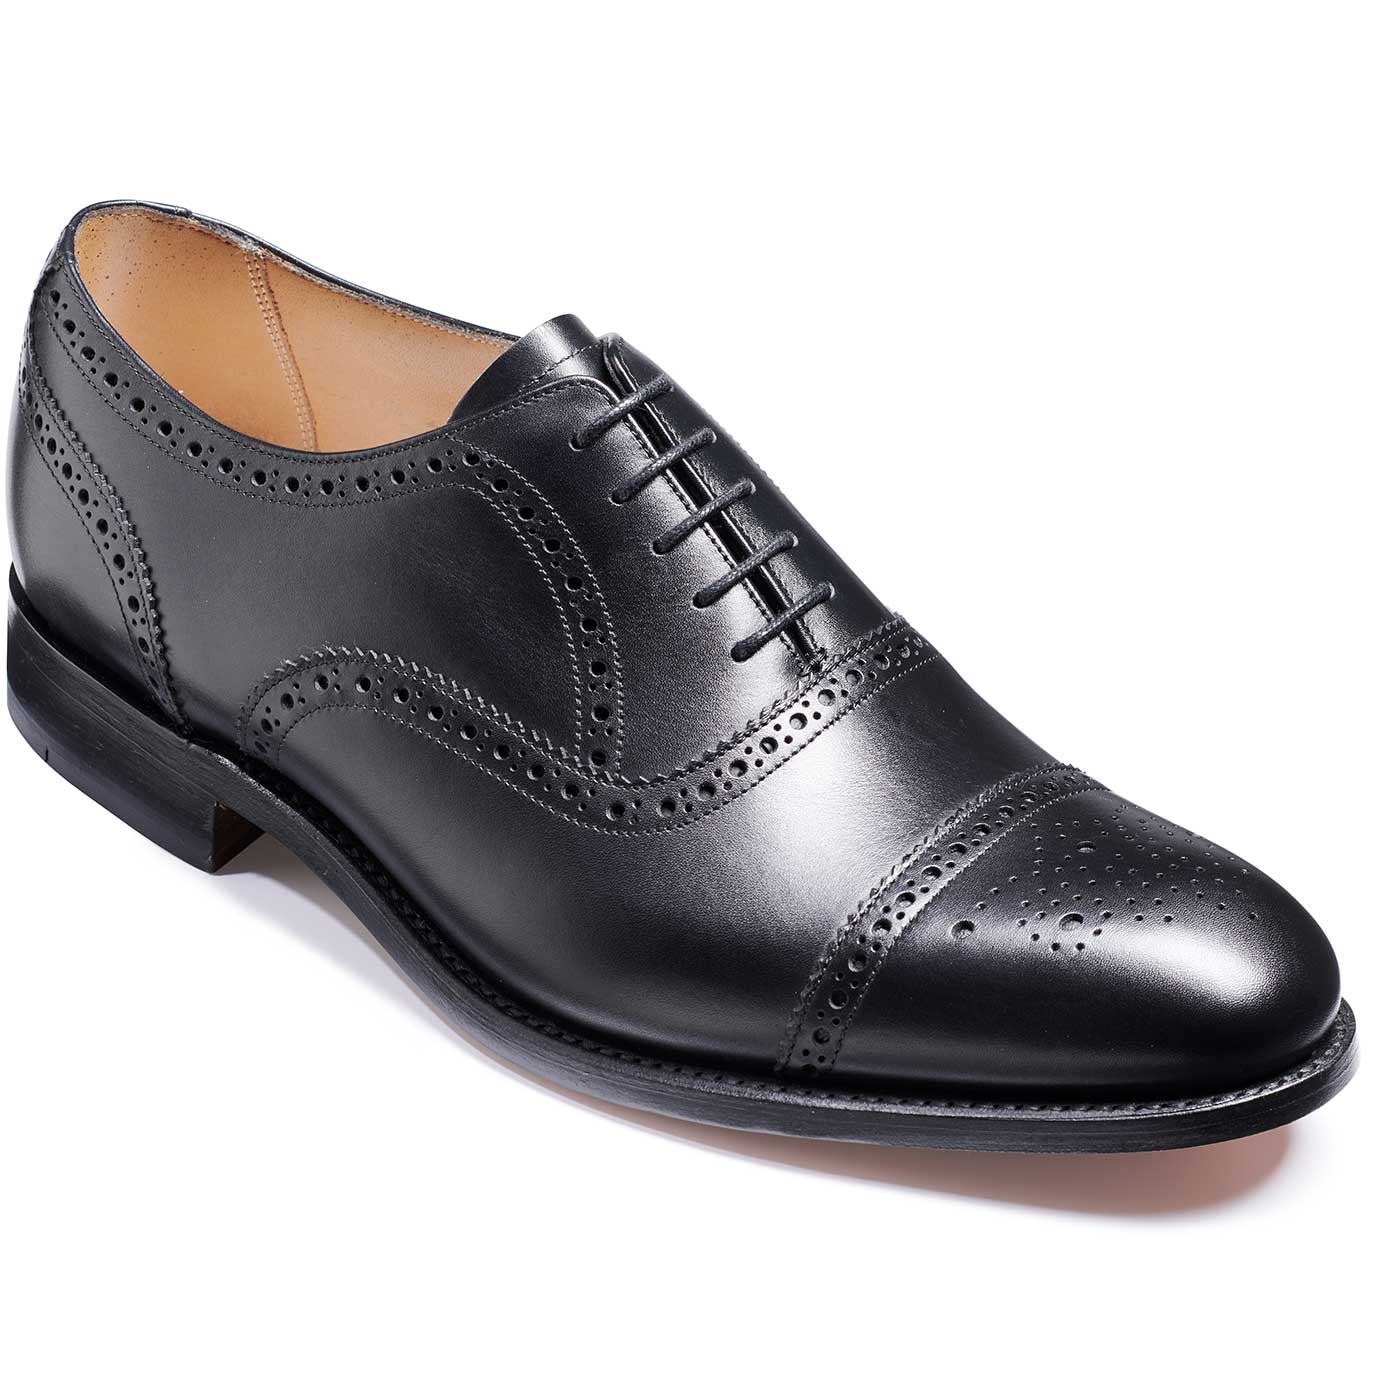 Barker Mirfield Shoes - Oxford Semi Brogue - Black Calf